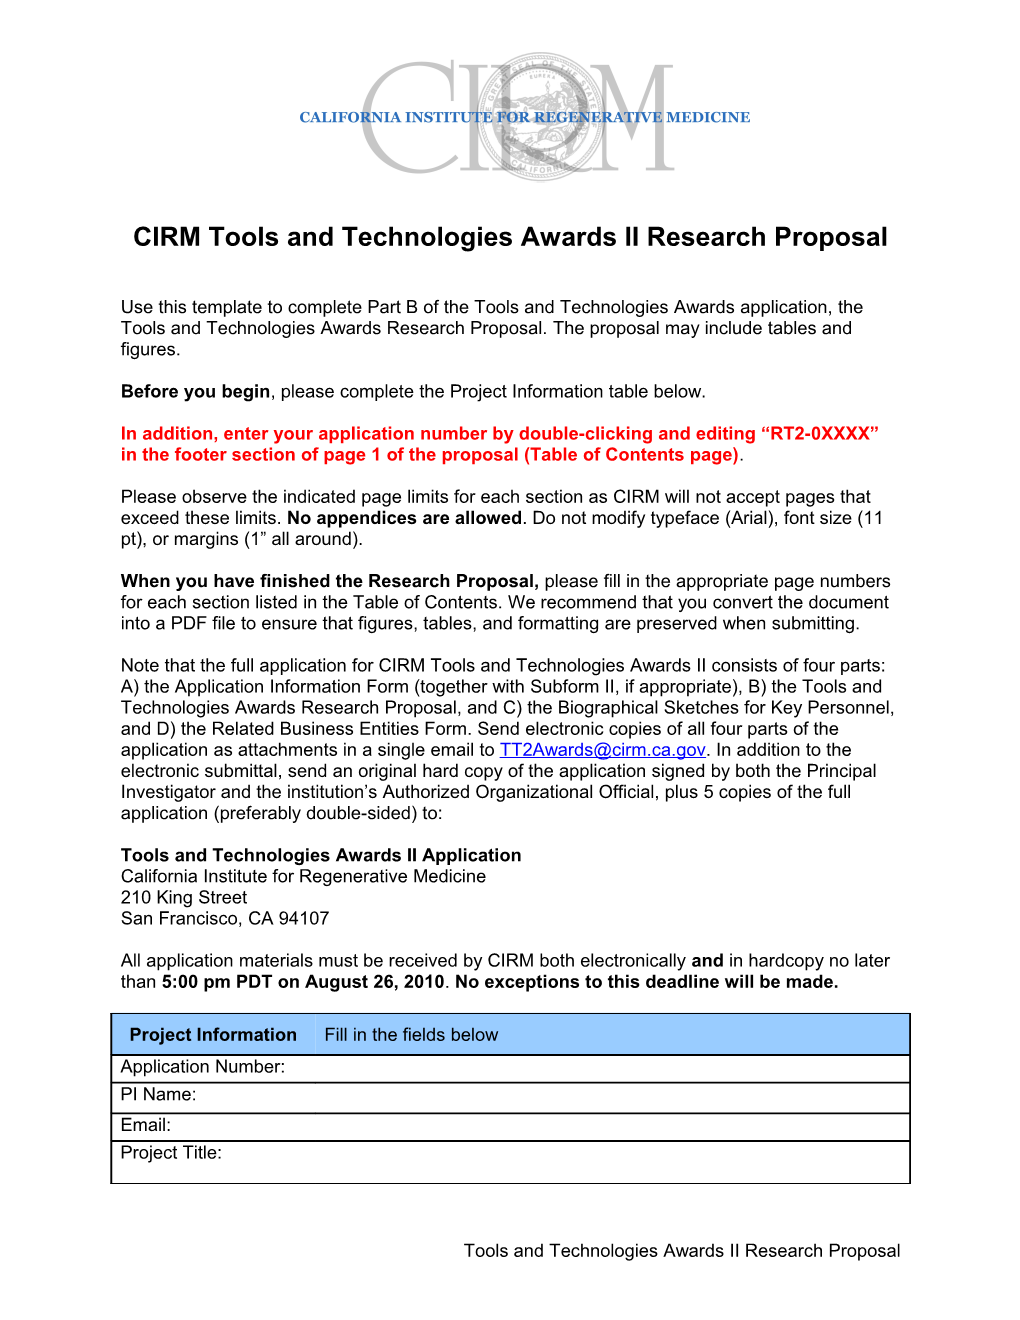 CIRM Basic Biology Awards I Research Proposal